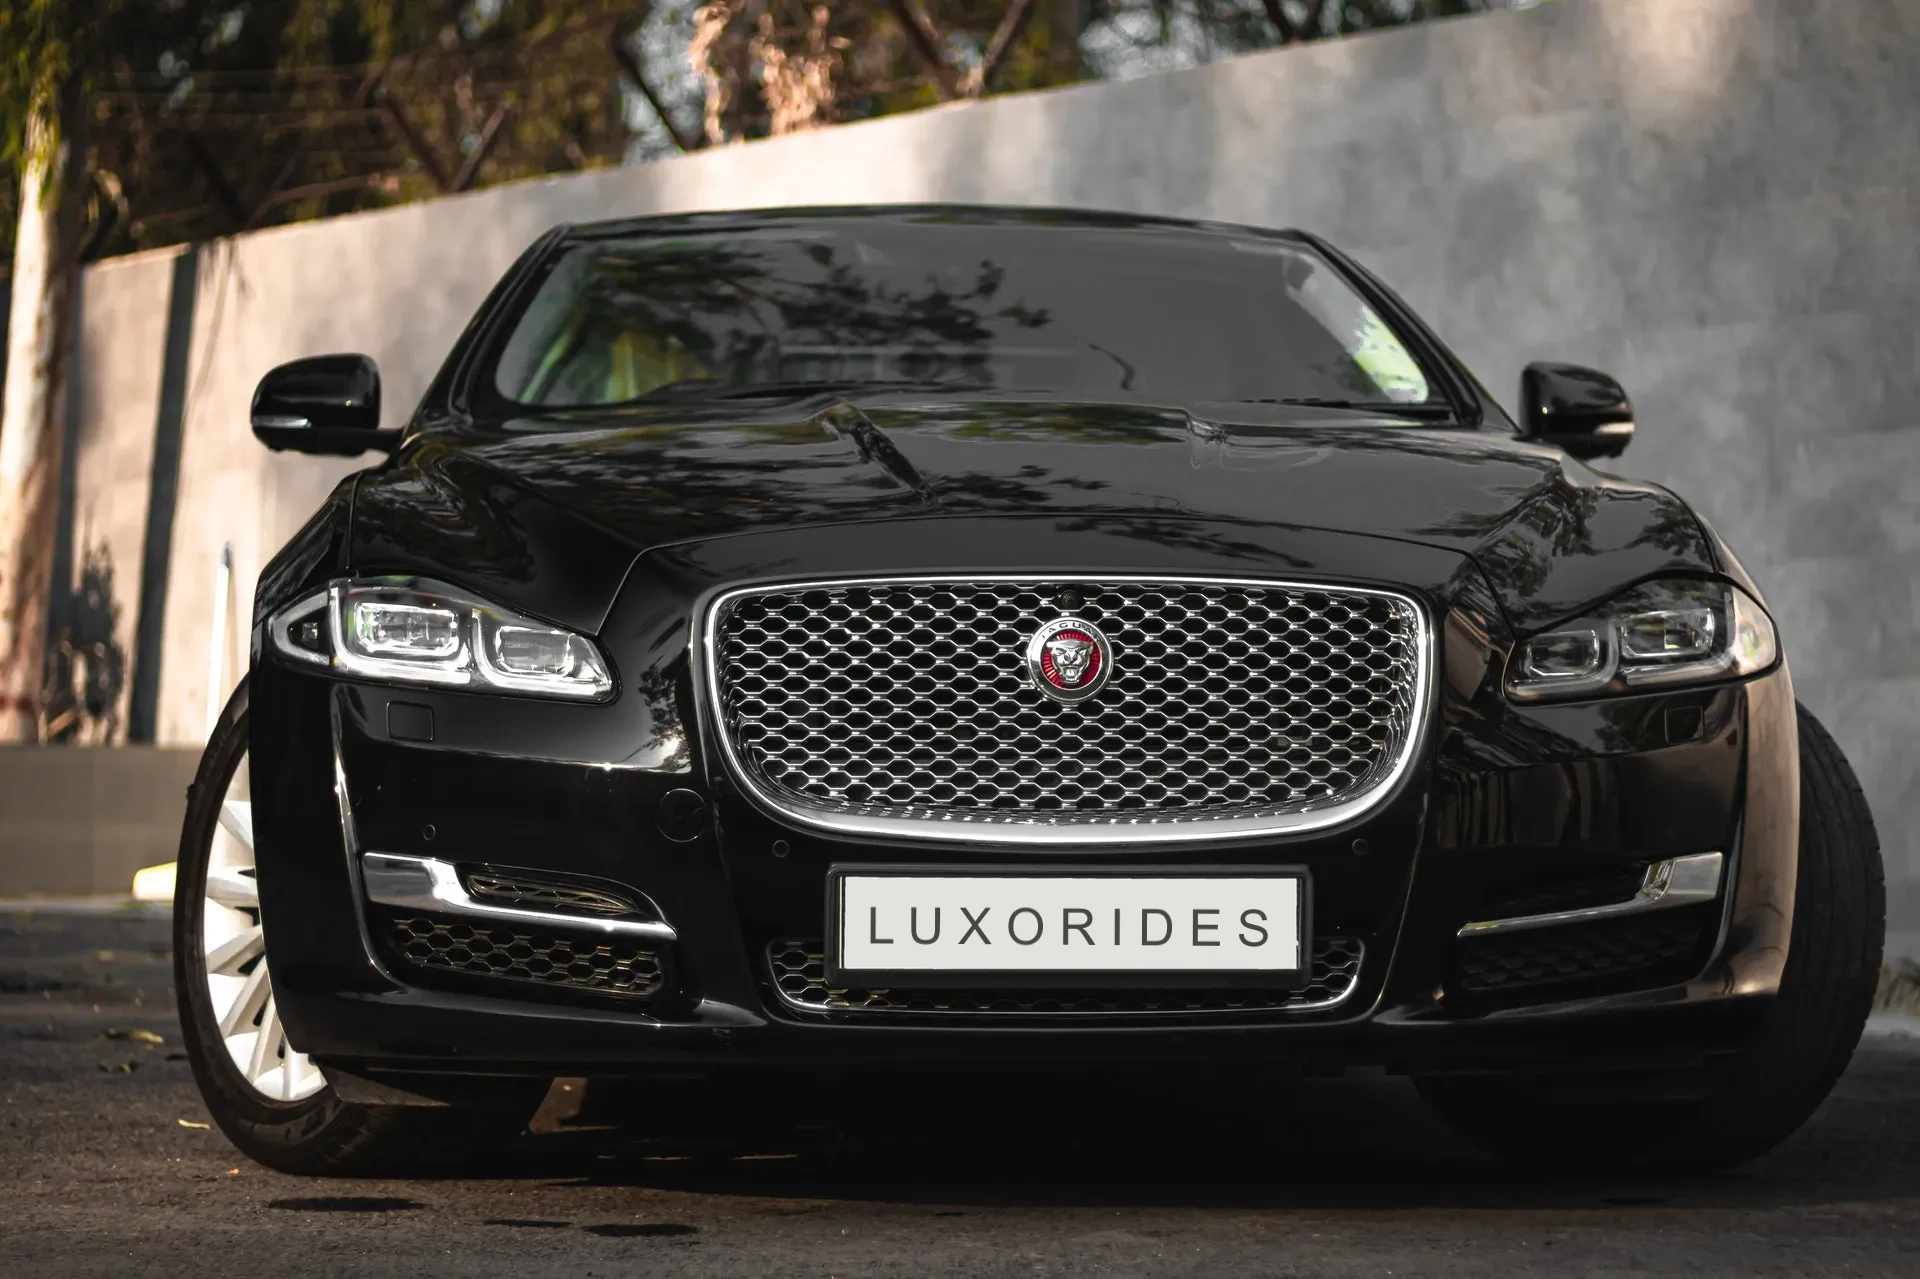 Rent Jaguar XJ L for wedding, corporate tour and Personal travel at Luxorides ( www.Luxorides.com ) Luxury Car Rental (Delhi, Gurgaon, Noida, Ghaziabad)